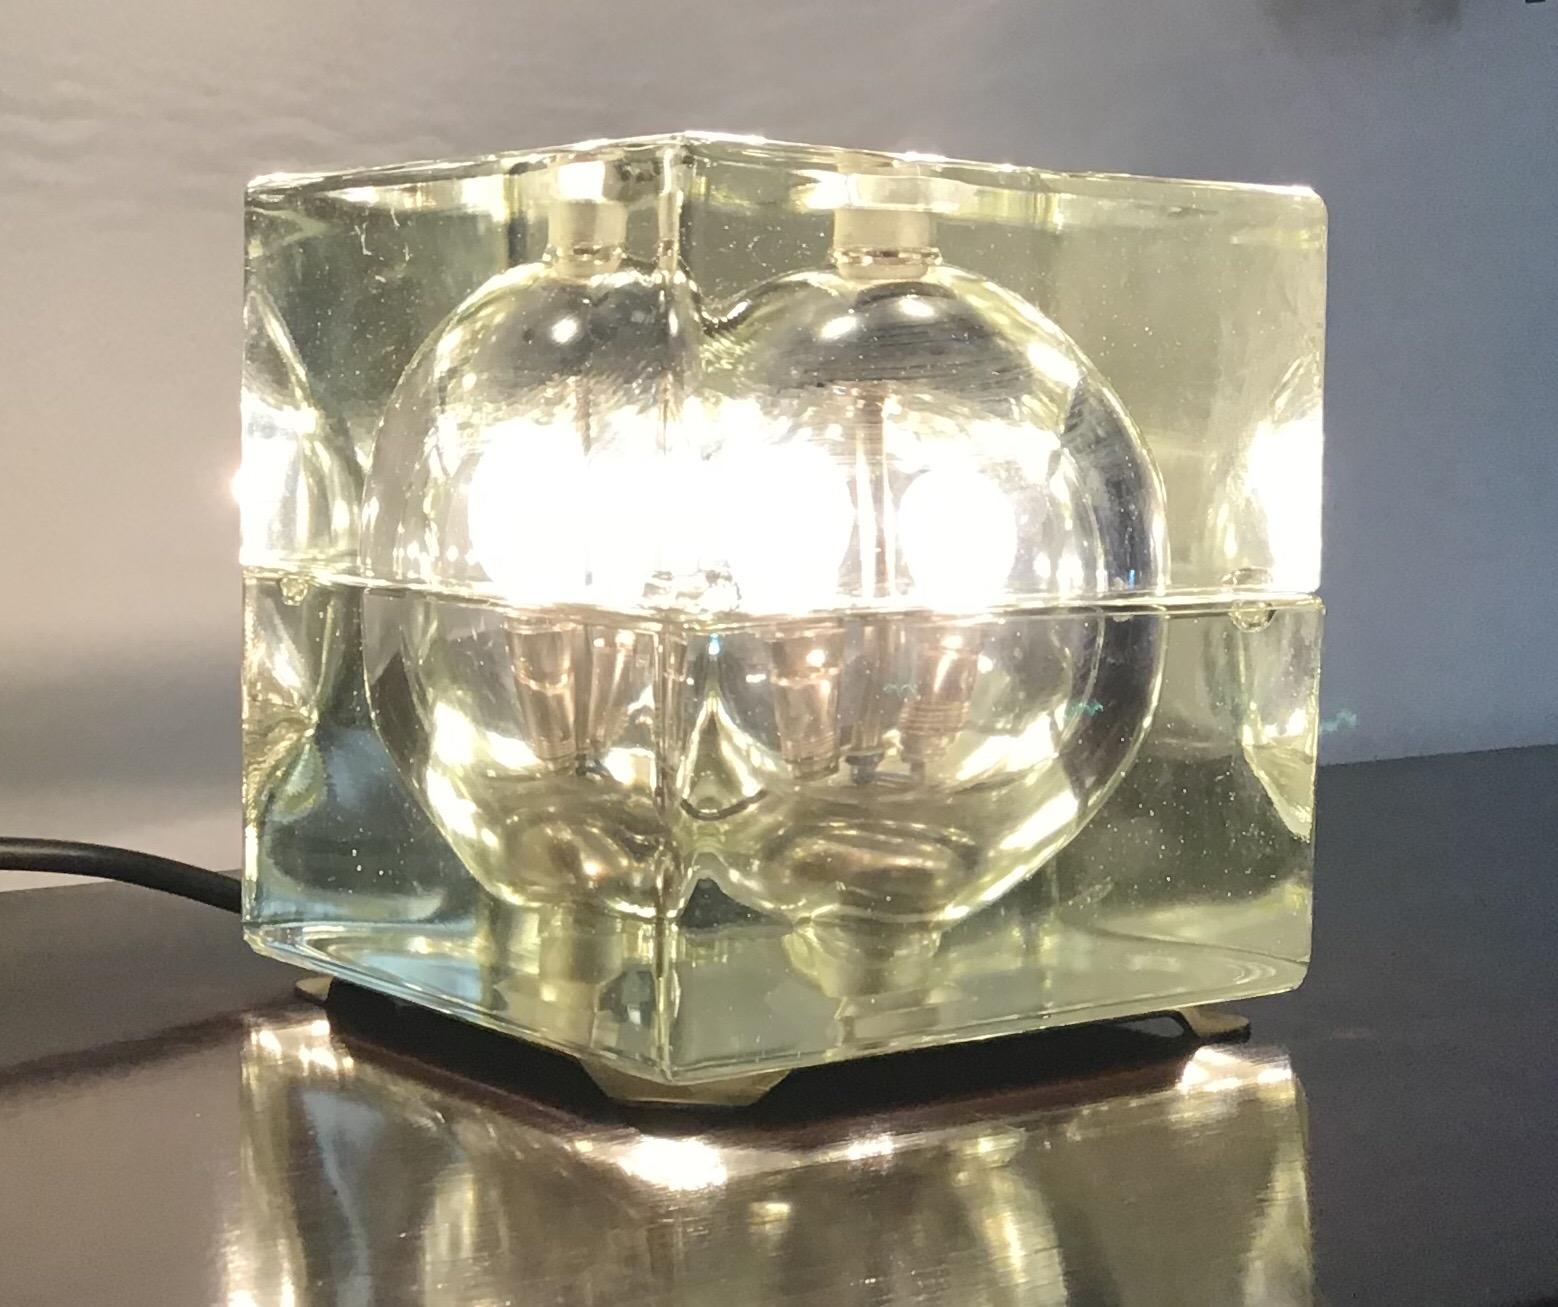 Alessandro Mendini “Cubosfera” Table Lamp or Appliqués, Glass Brass, 1968 For Sale 5